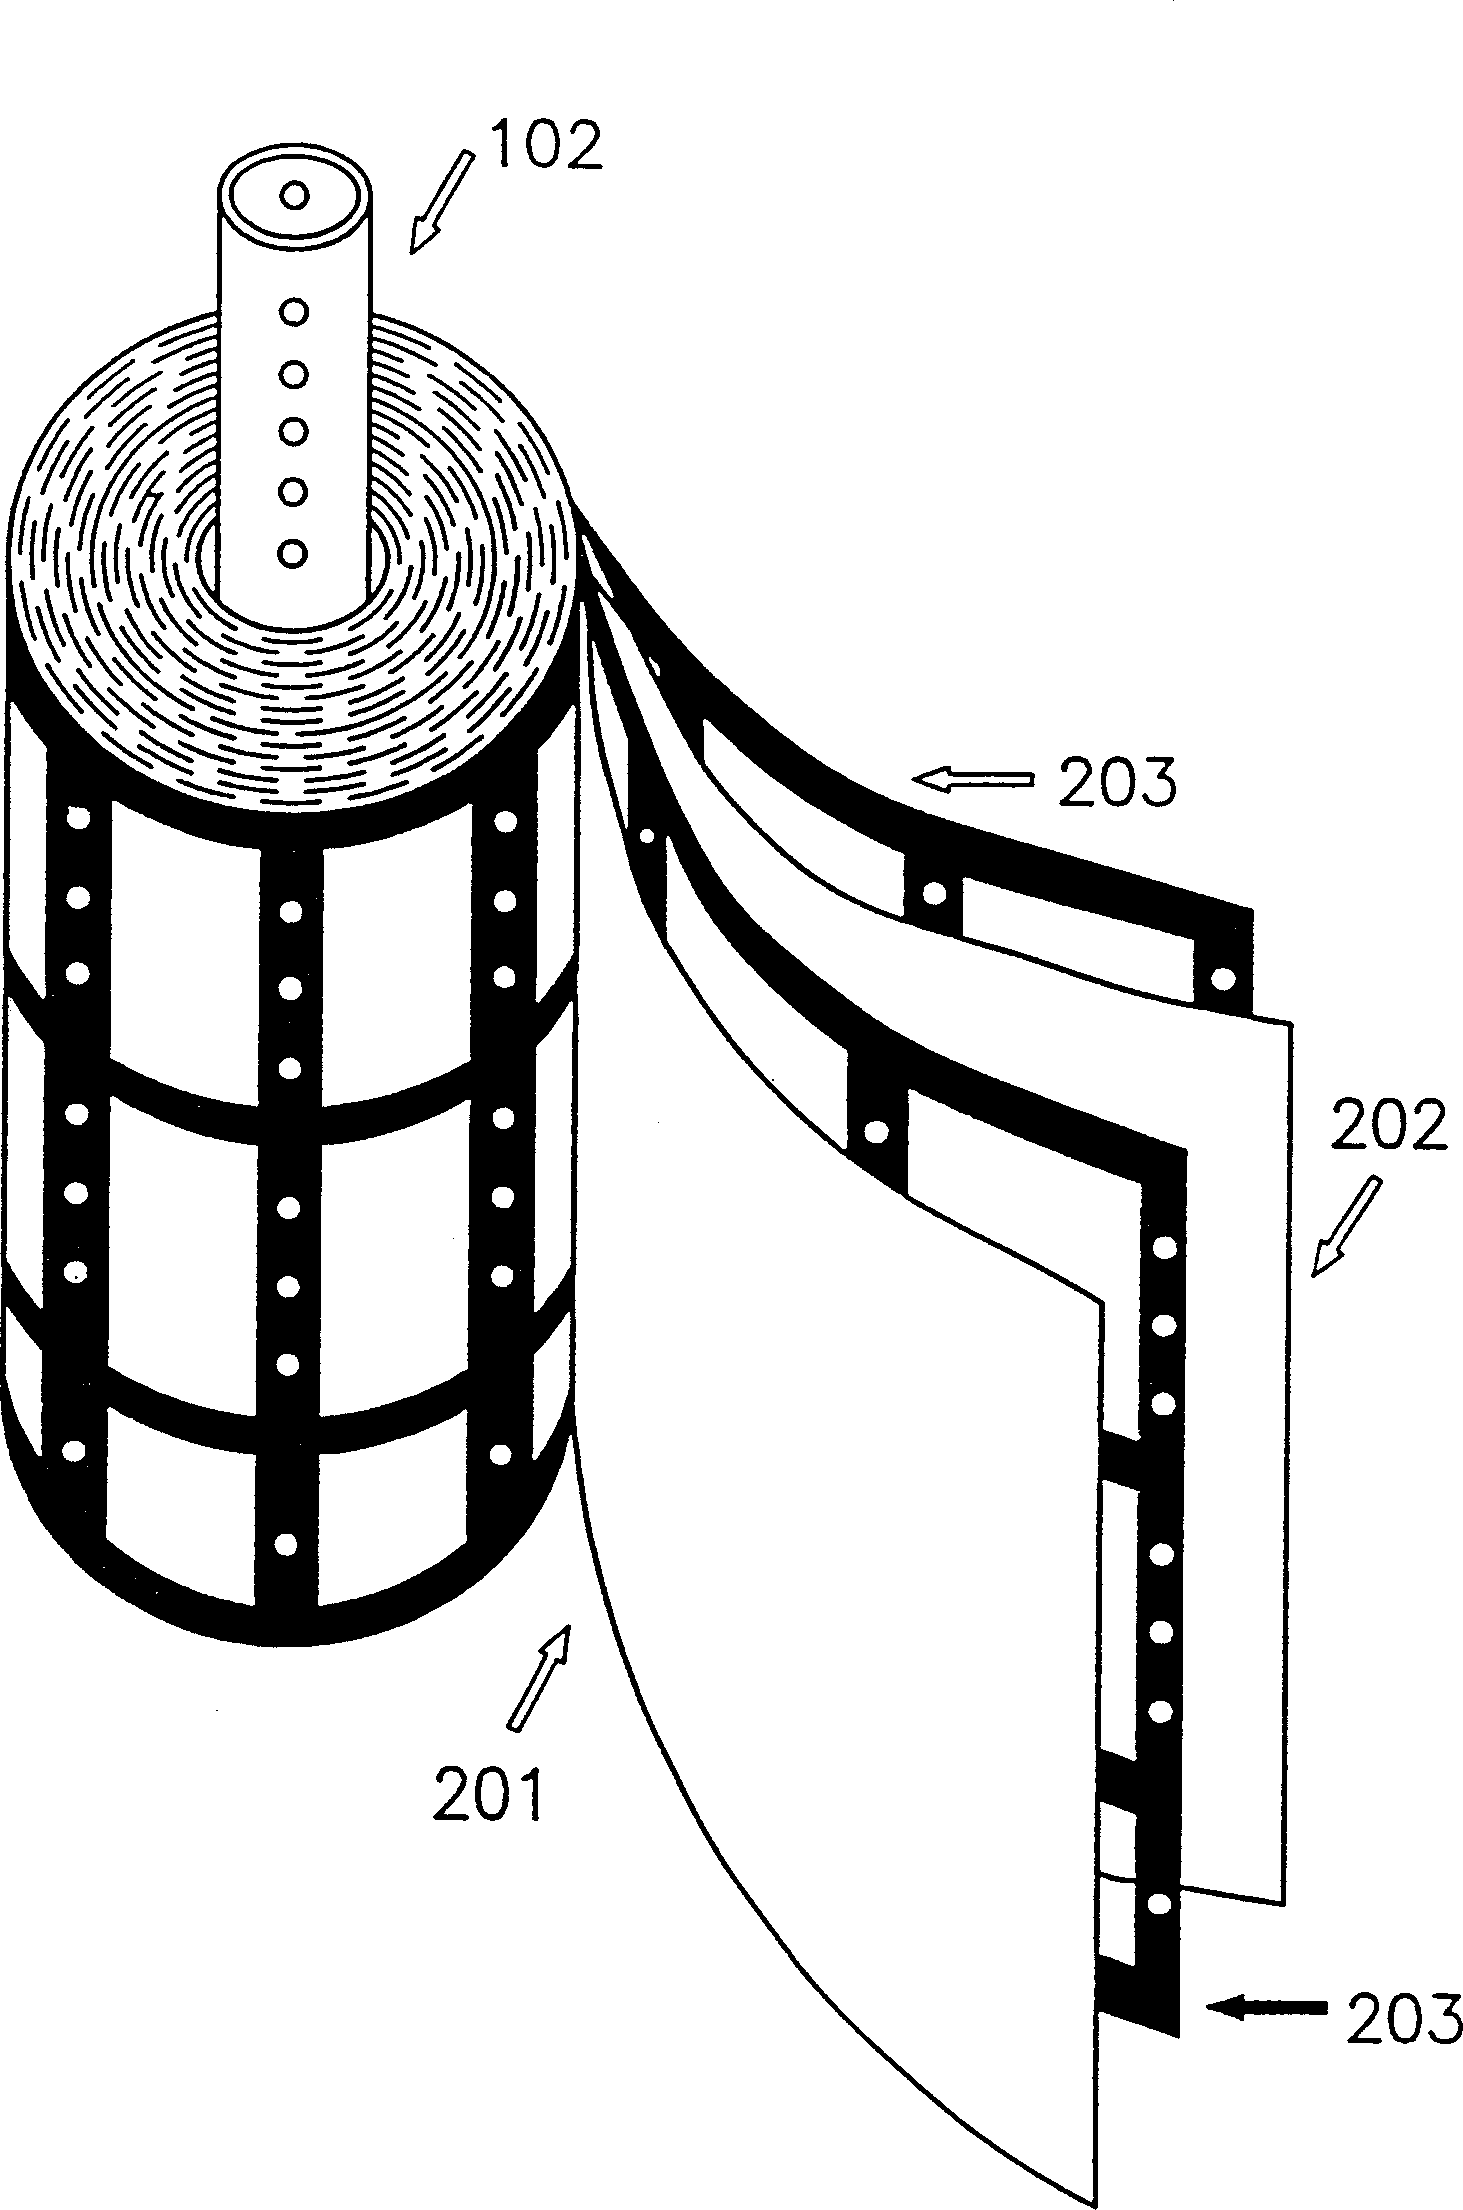 Independent flow-thru capacitor